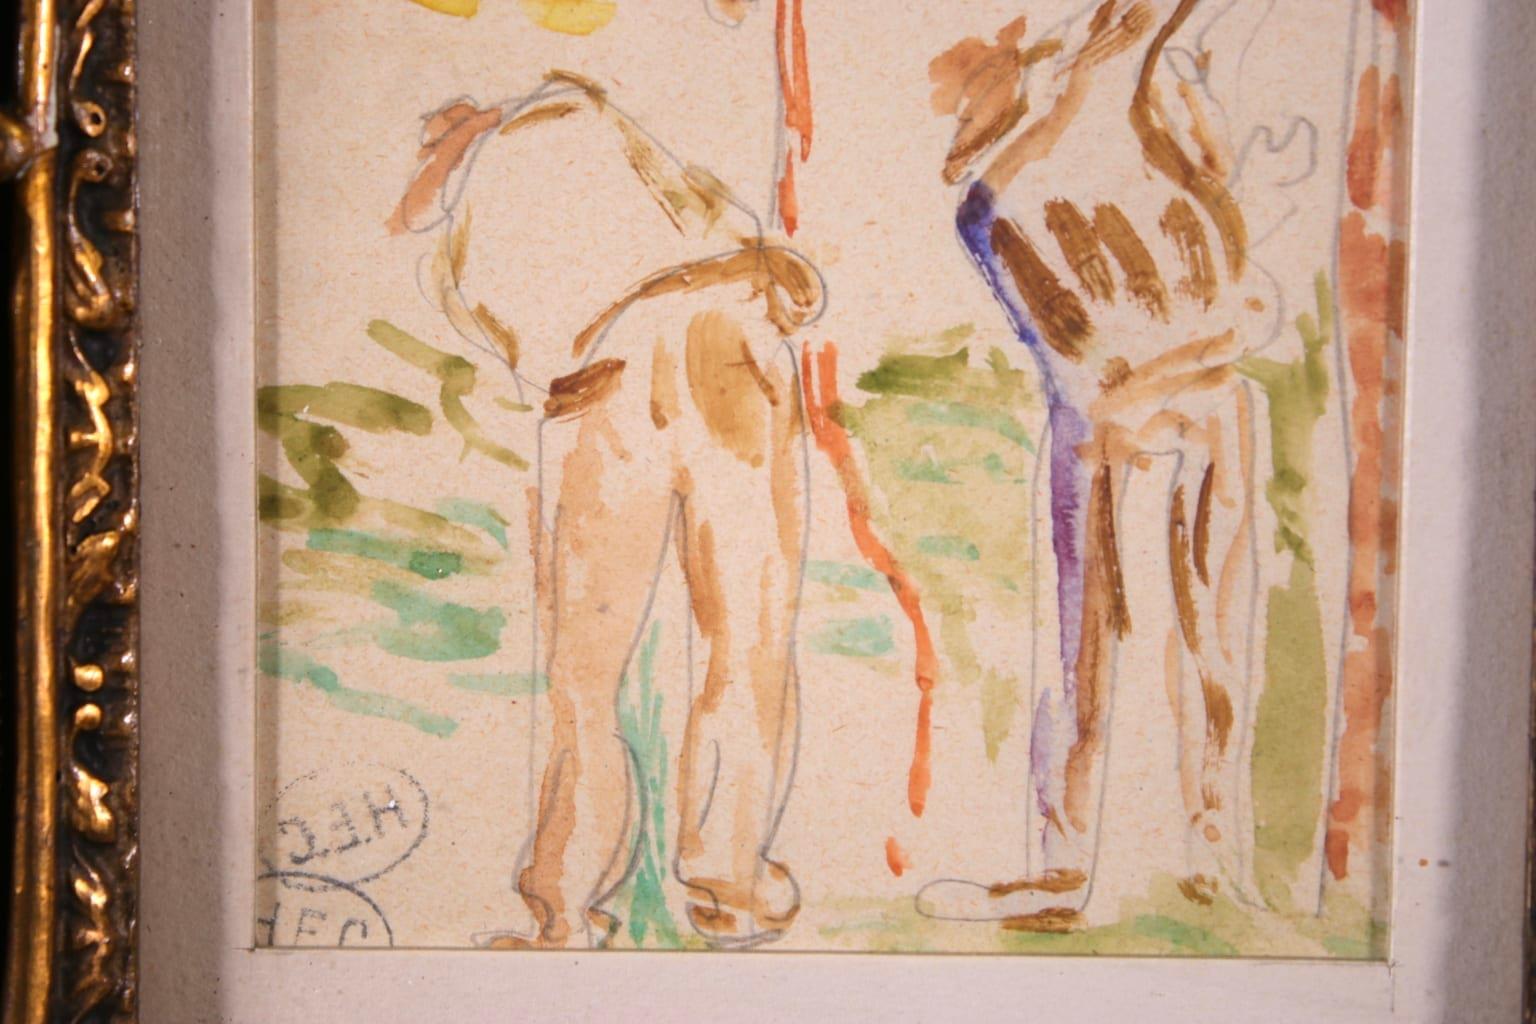 Etude de travailleurs - Impressionist Watercolor, Study of Figures - Henri Cross 1